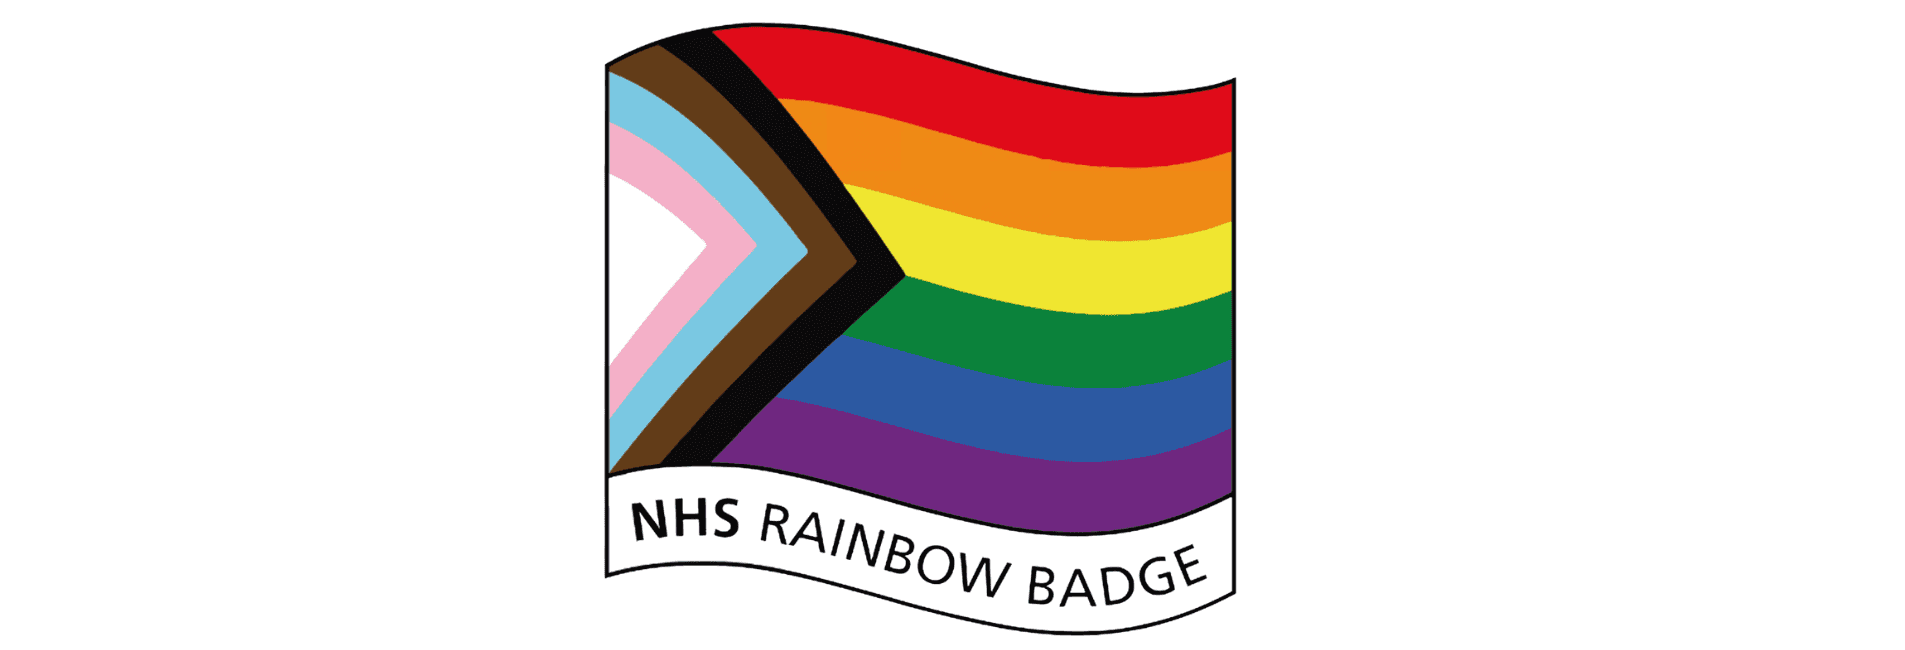 NHS Rainbow Badge